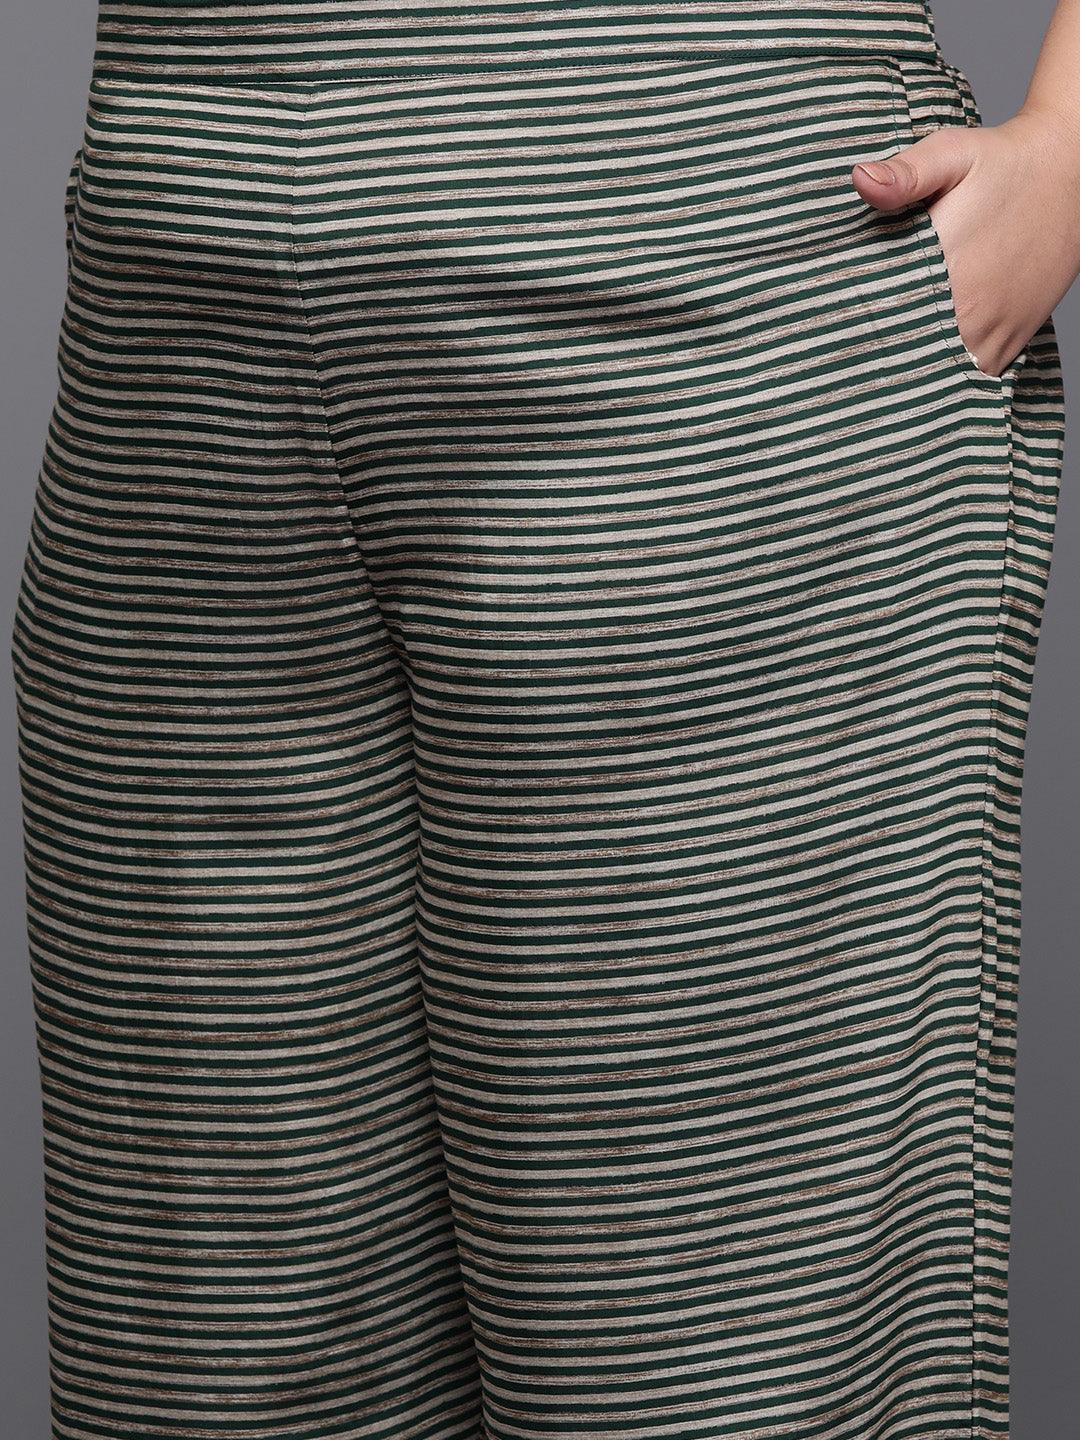 Plus Size Green Printed Silk Blend Straight Kurta With Trousers & Dupatta - Libas